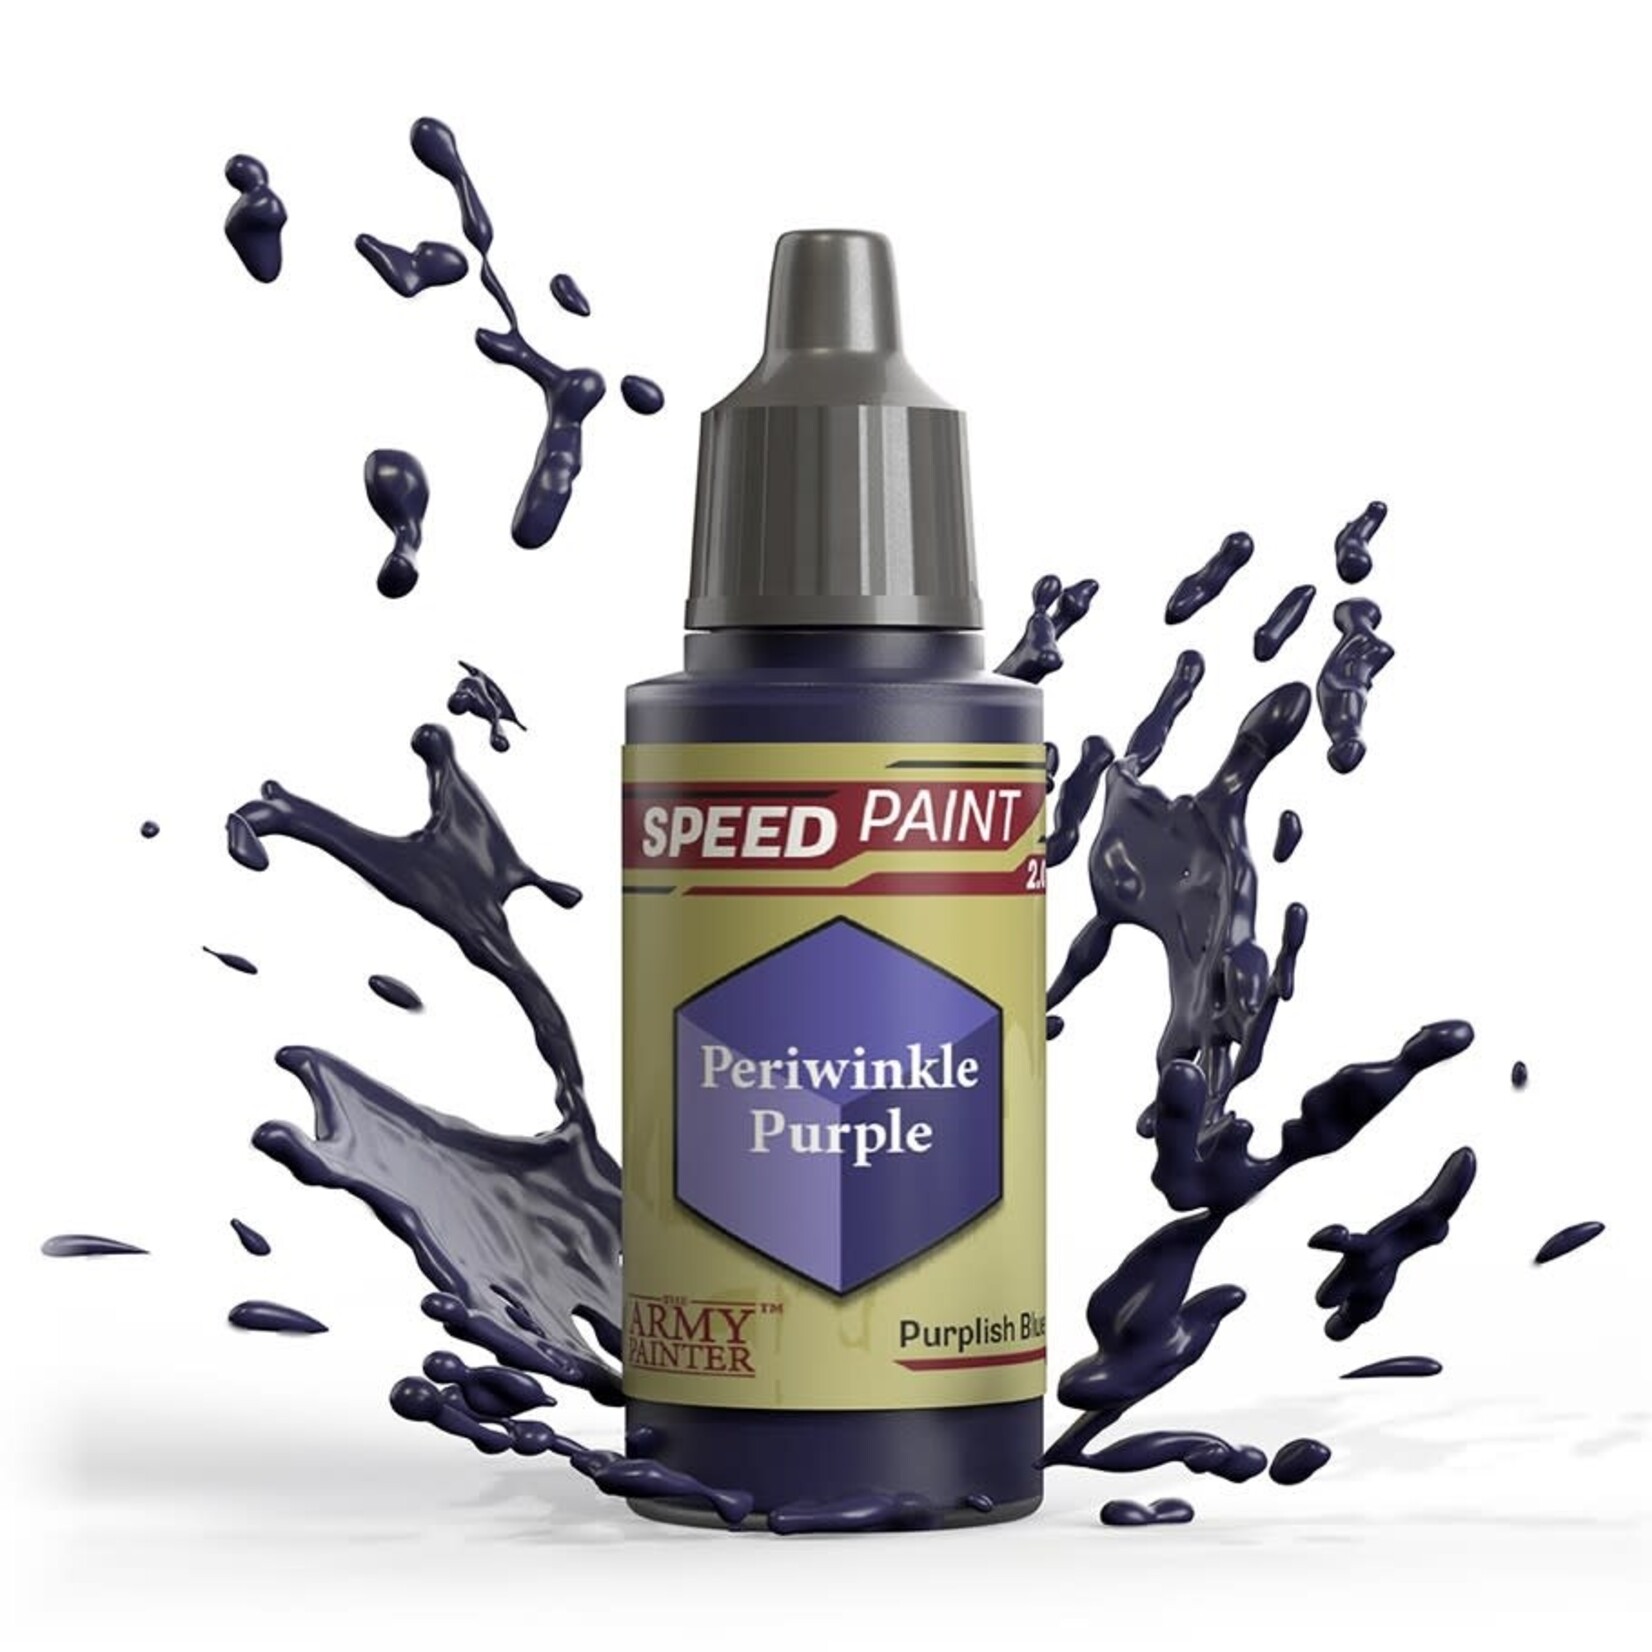 The Army Painter Speedpaint: Periwinkle Purple